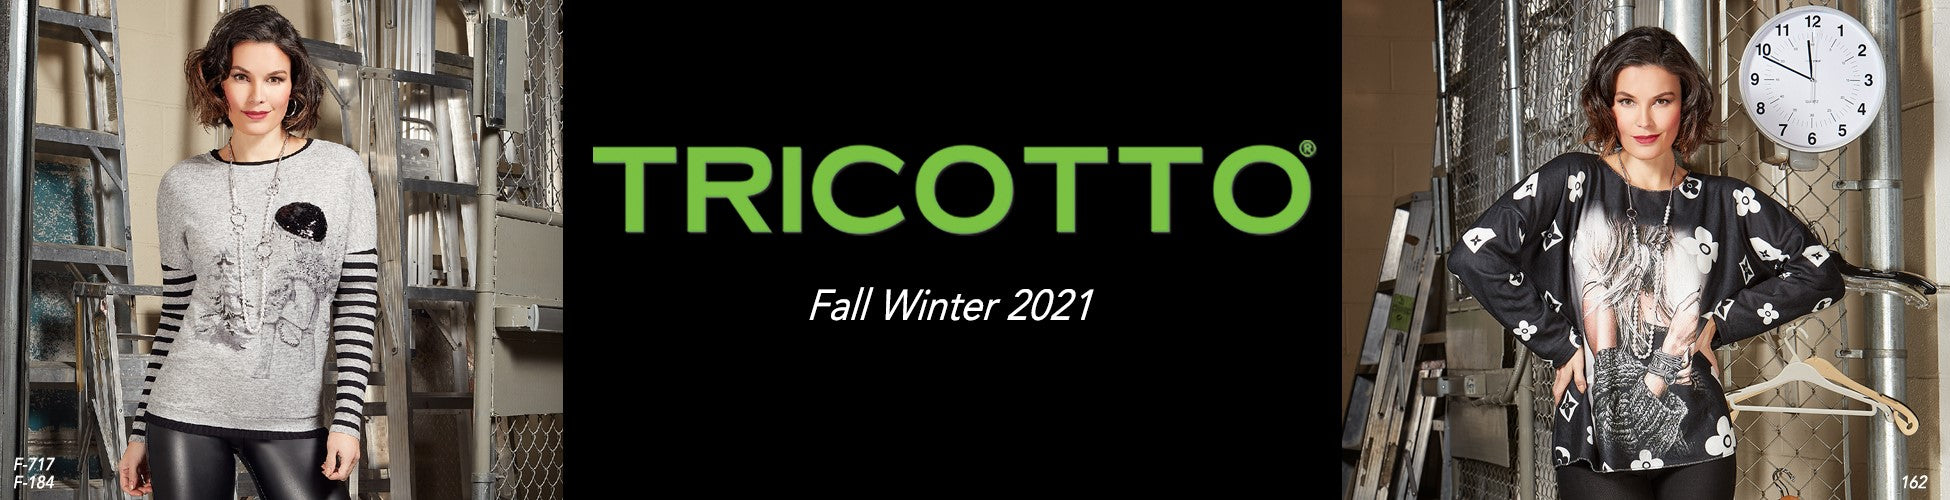 High Fashion Tricotto Sequin Jacket-Tricotto Fall 2021-Tricotto Fashion Online Canada